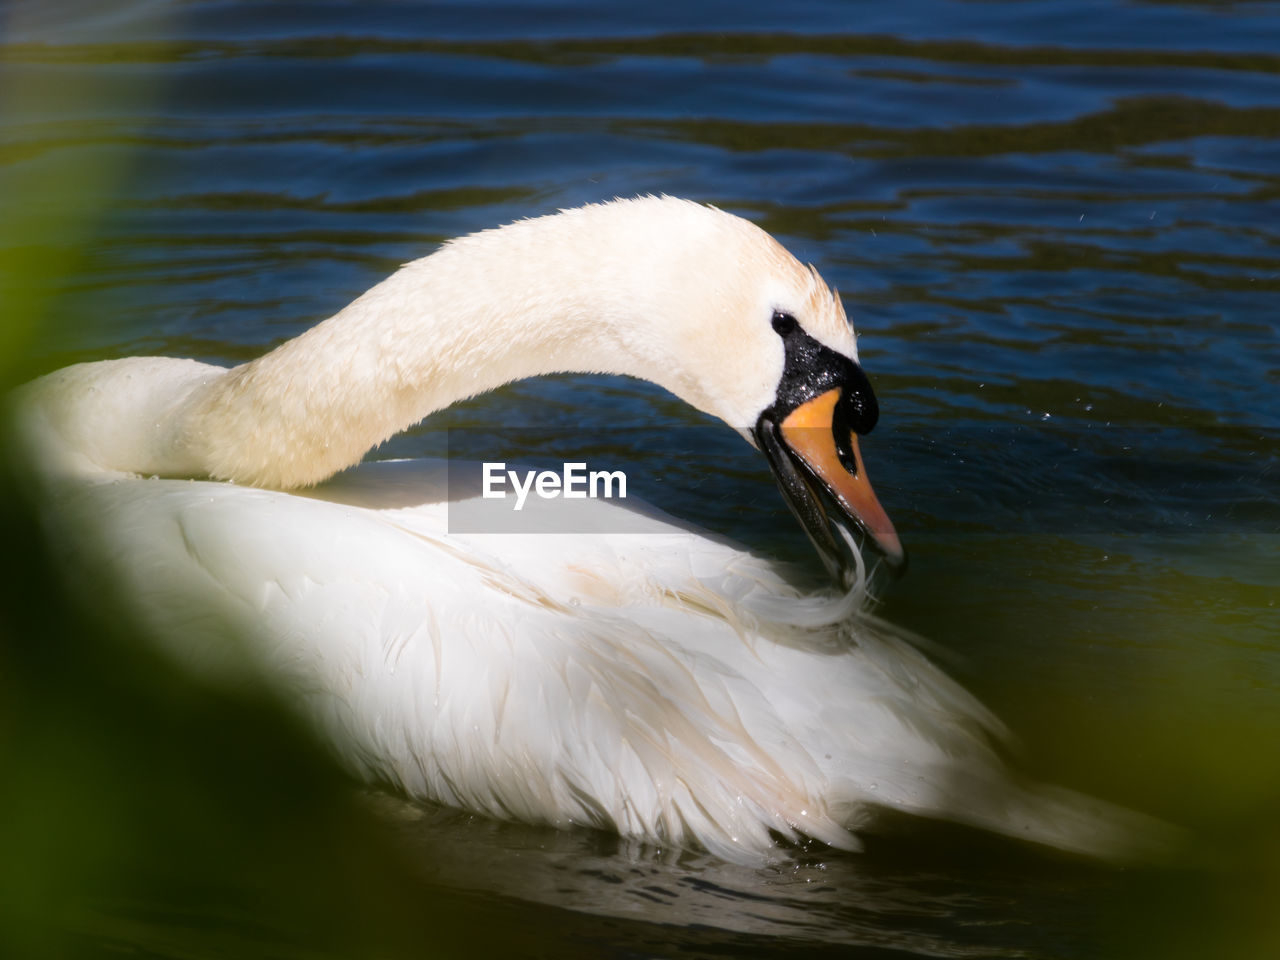 Mute swan cygnus olor floating and preening on lake, england, uk